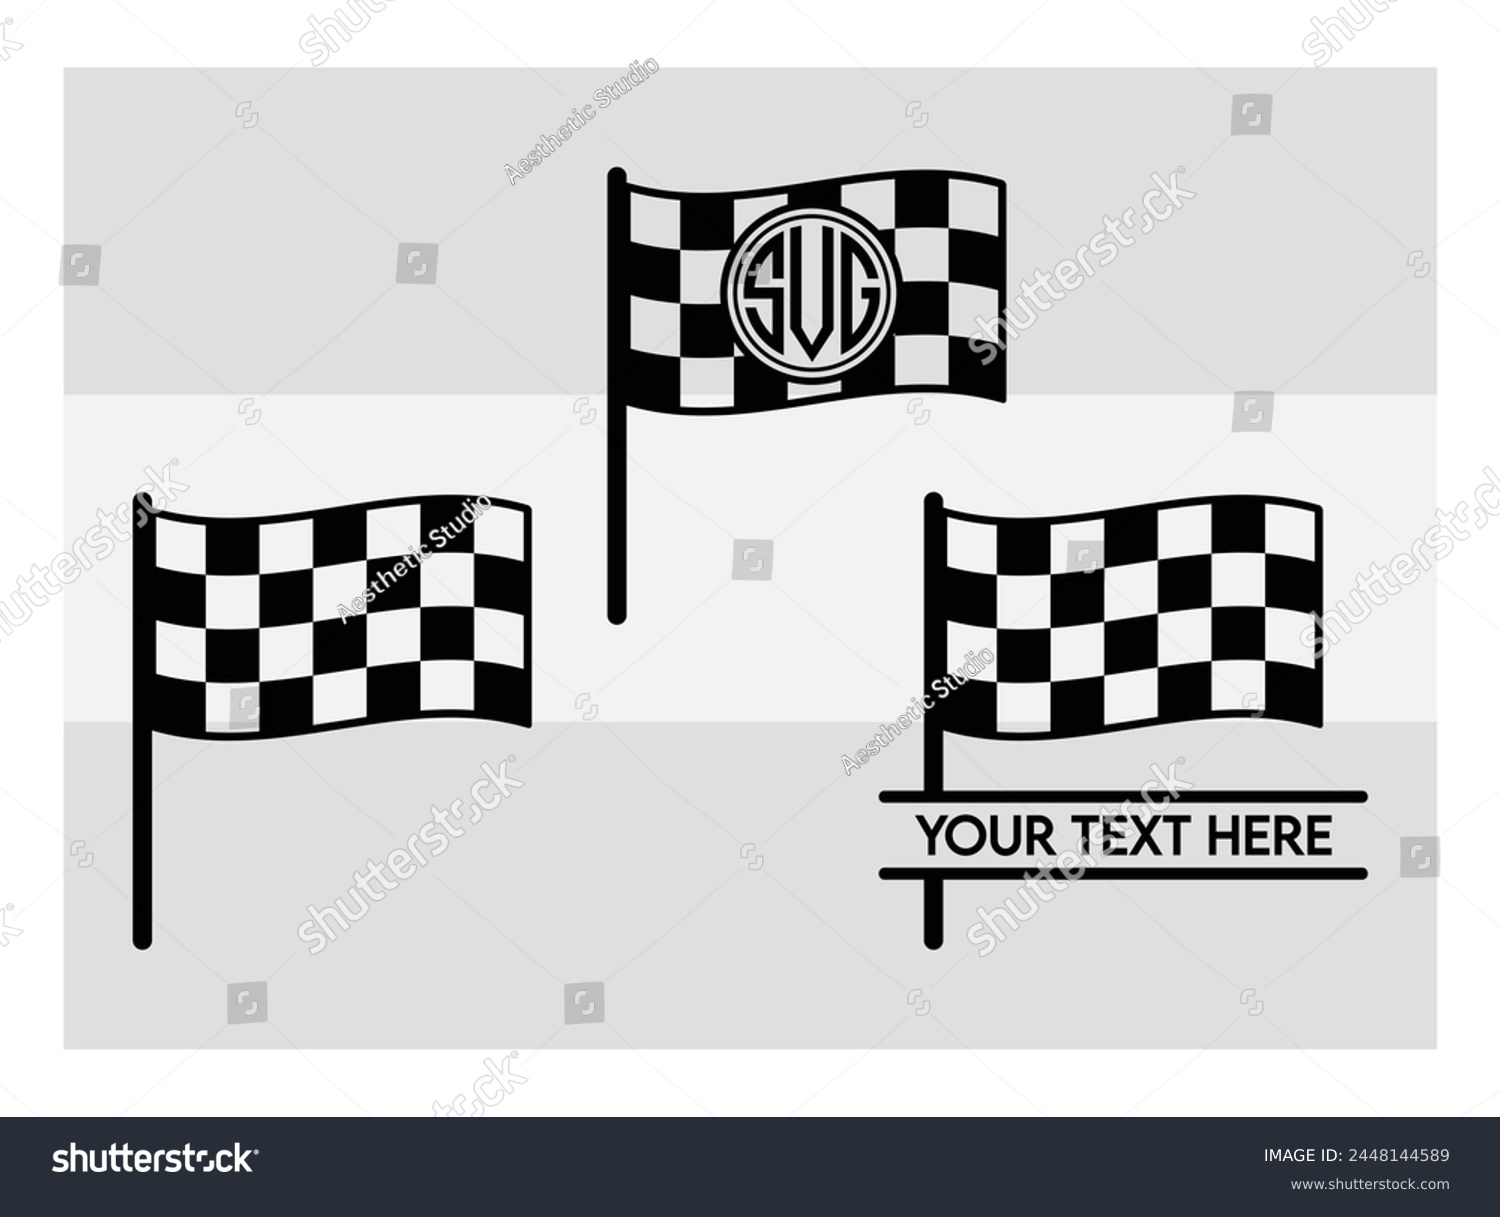 SVG of Racing Flag, Racing Flag Silhouette, Race, Sports, Racing Game, Flag, Checkered Flag, Sports Racing, Game, vector, eps, svg